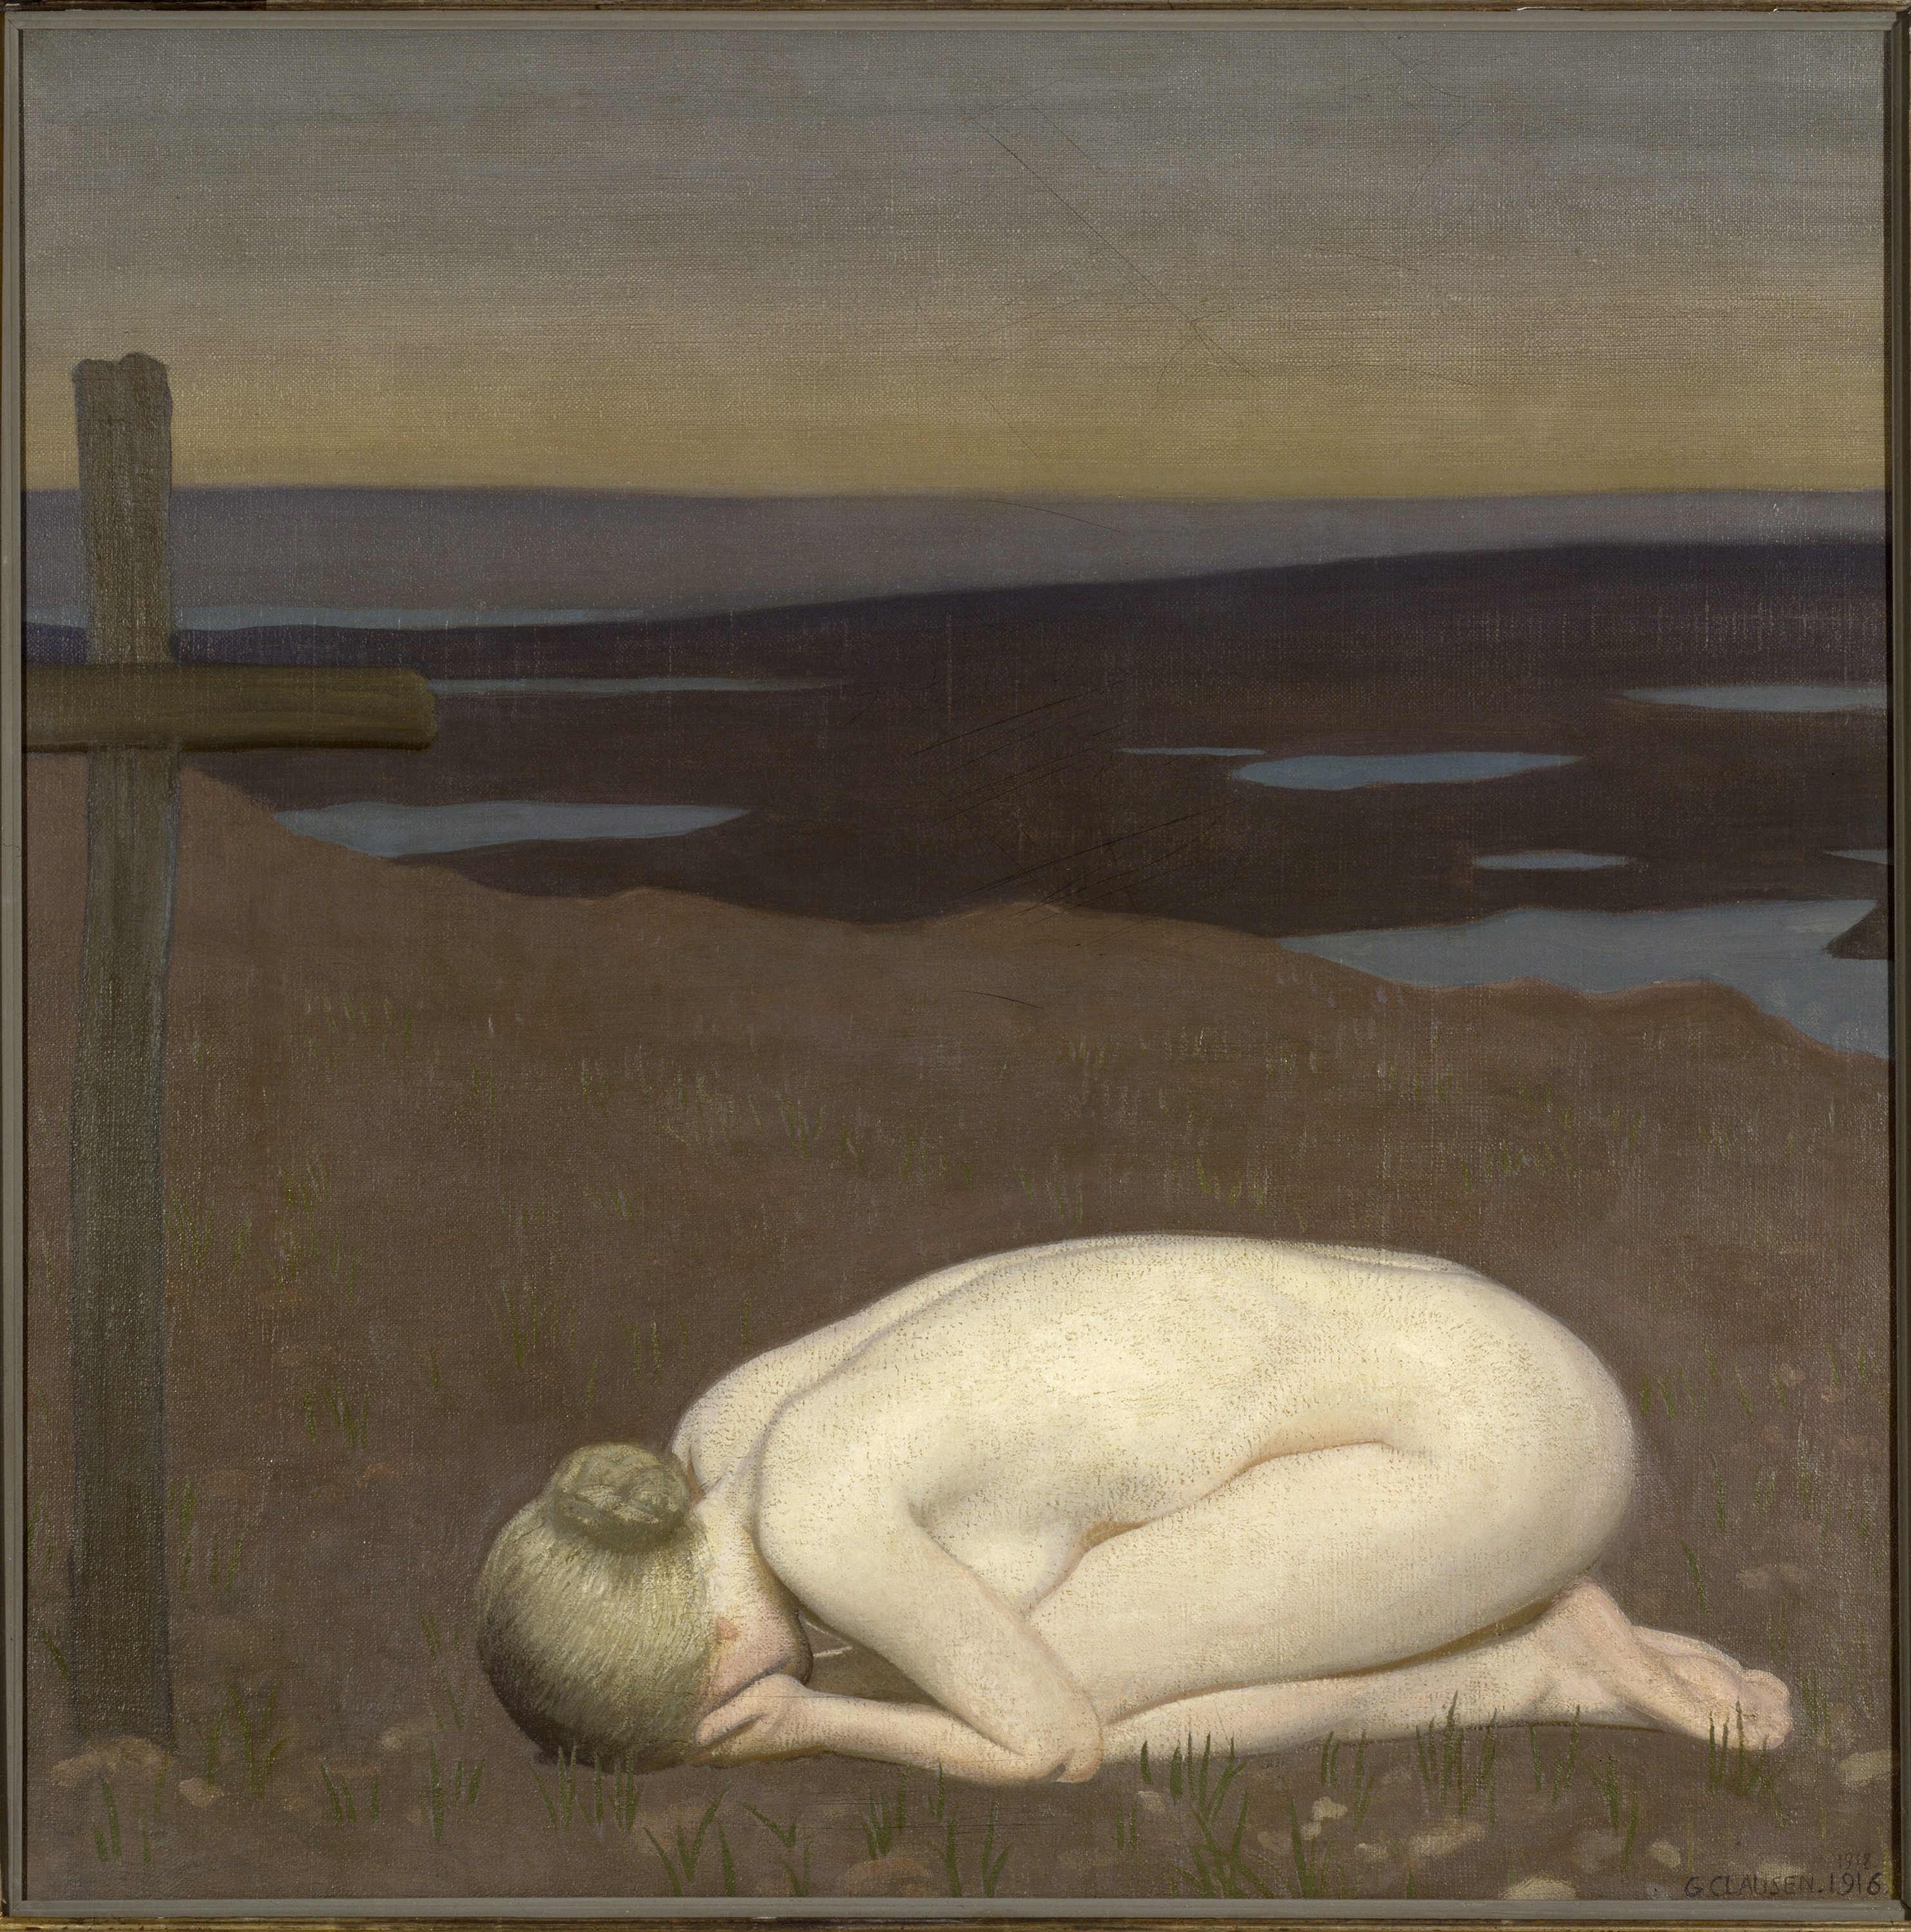 शोक करता युवाकाल by George Clausen - 1916 - 91.4 x 91.4 cm 